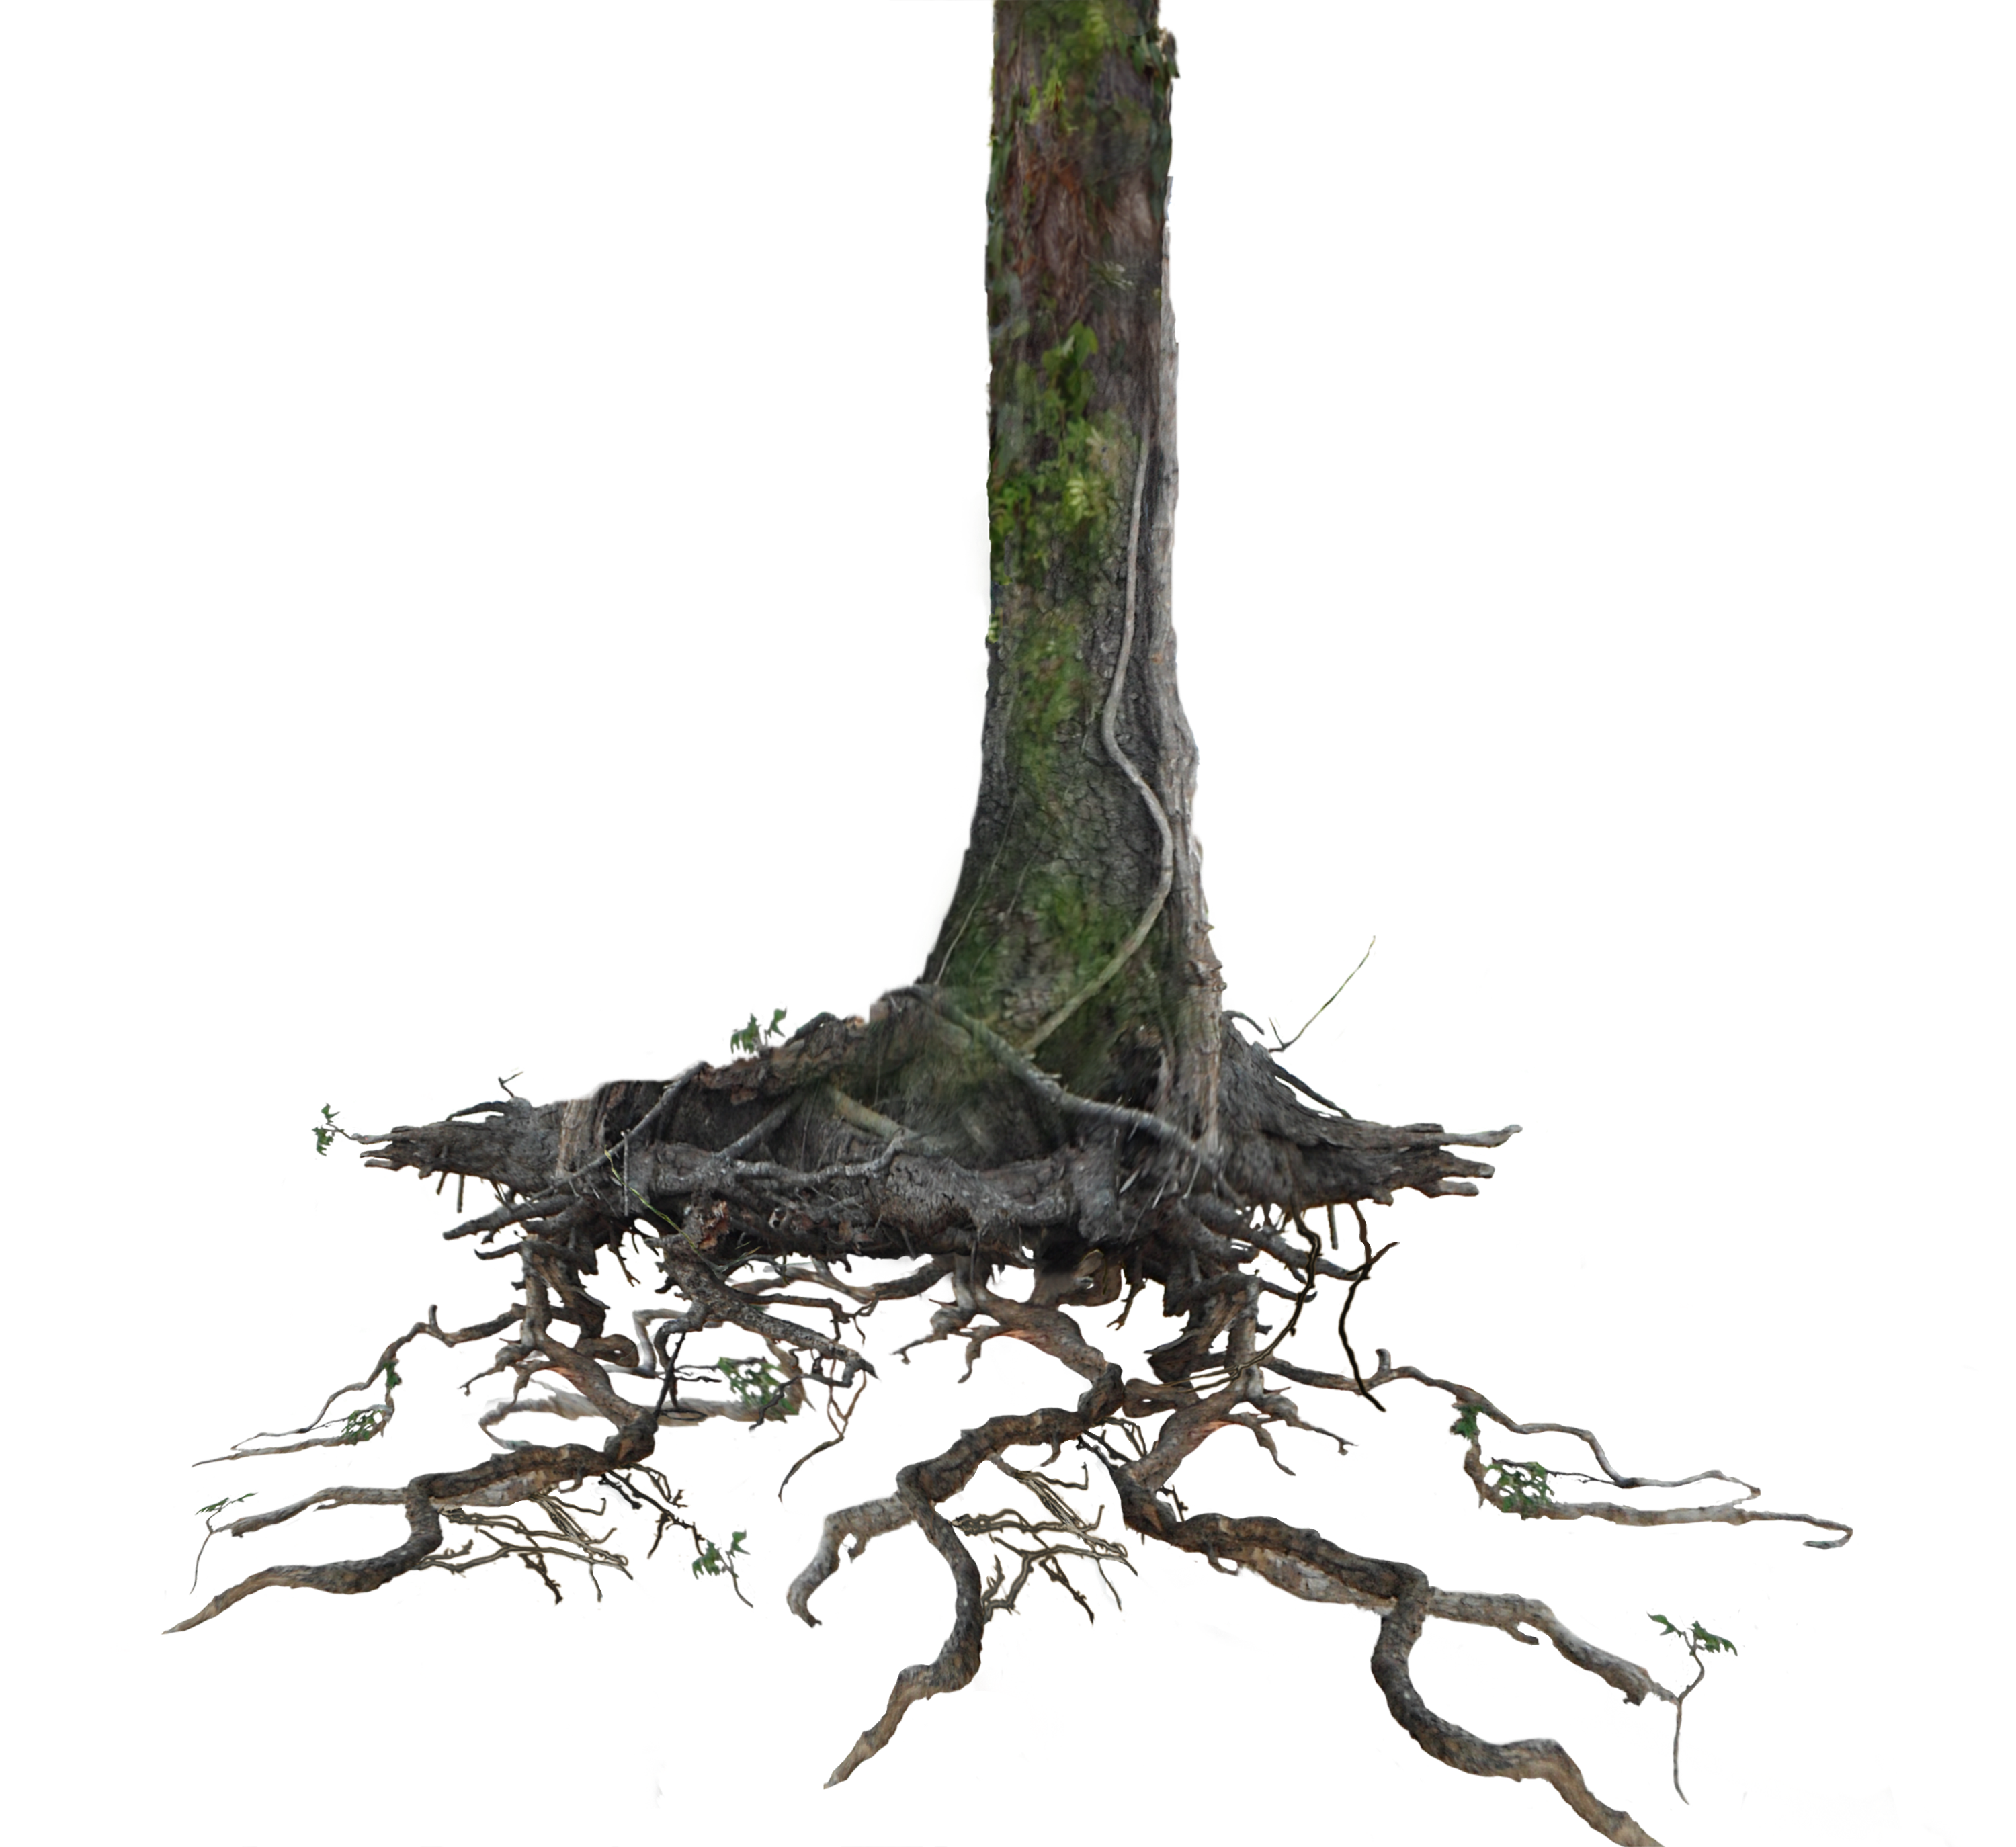 roots clipart stump